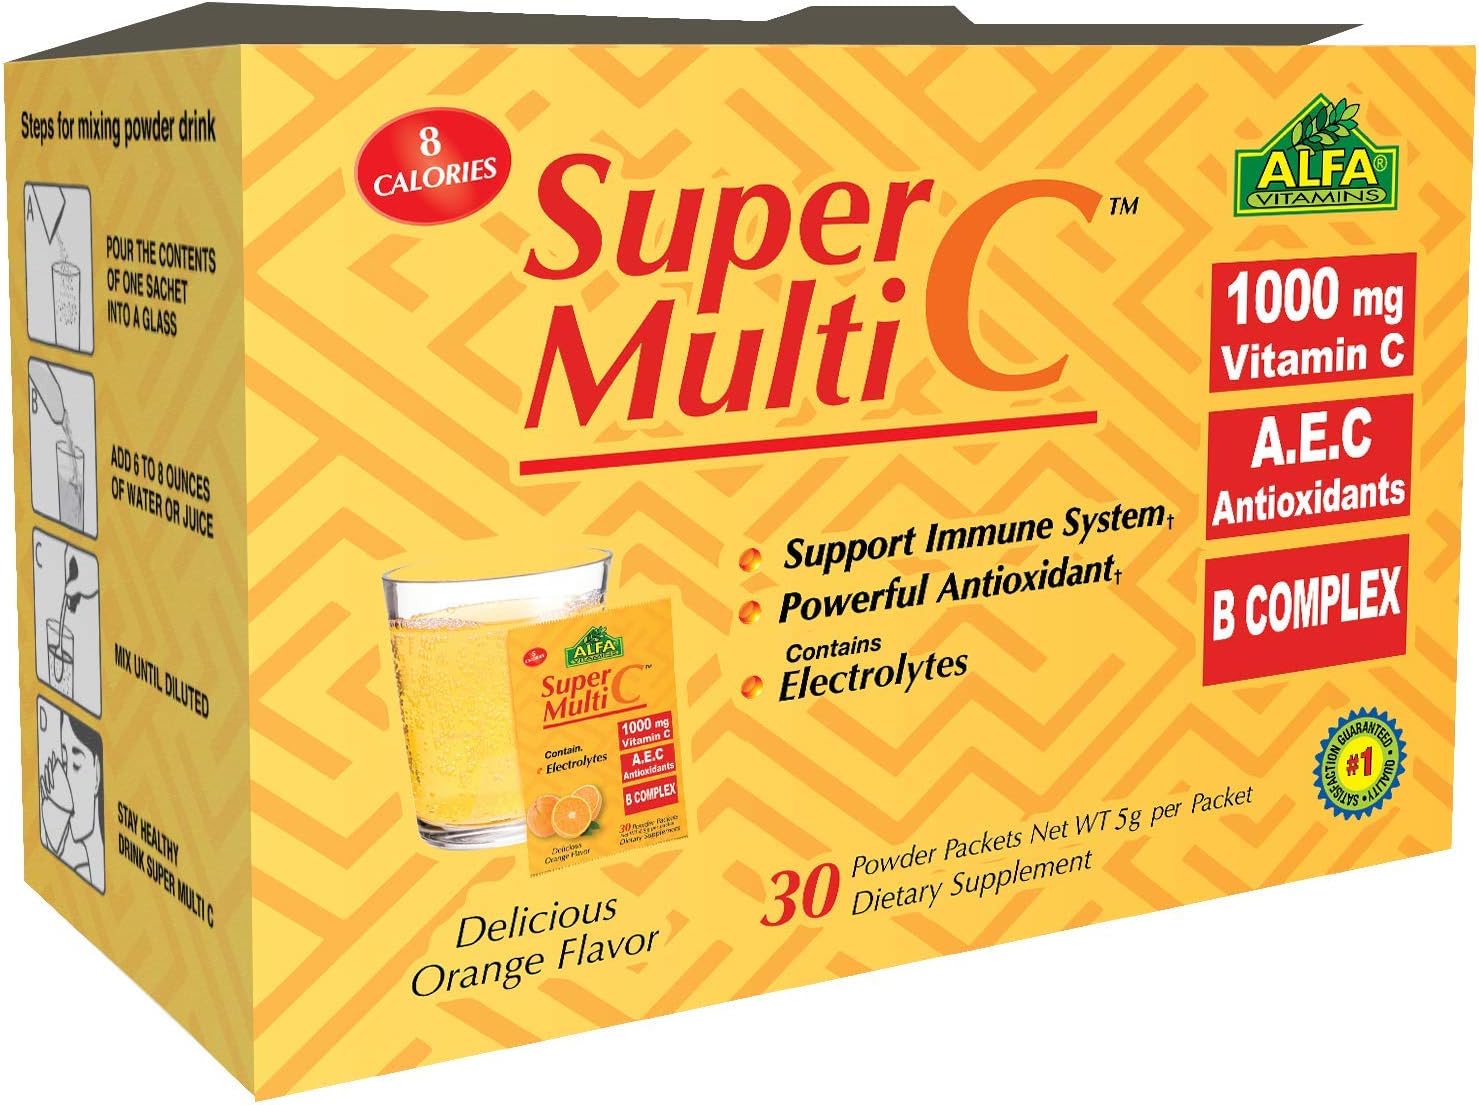 ALFA VITAMINS Super Multi C, Vitamin C Powder and Multivitamin Supplement Premium Quality Source of Nutrients, Minerals, Antioxidants & Electrolytes - 30 Packets